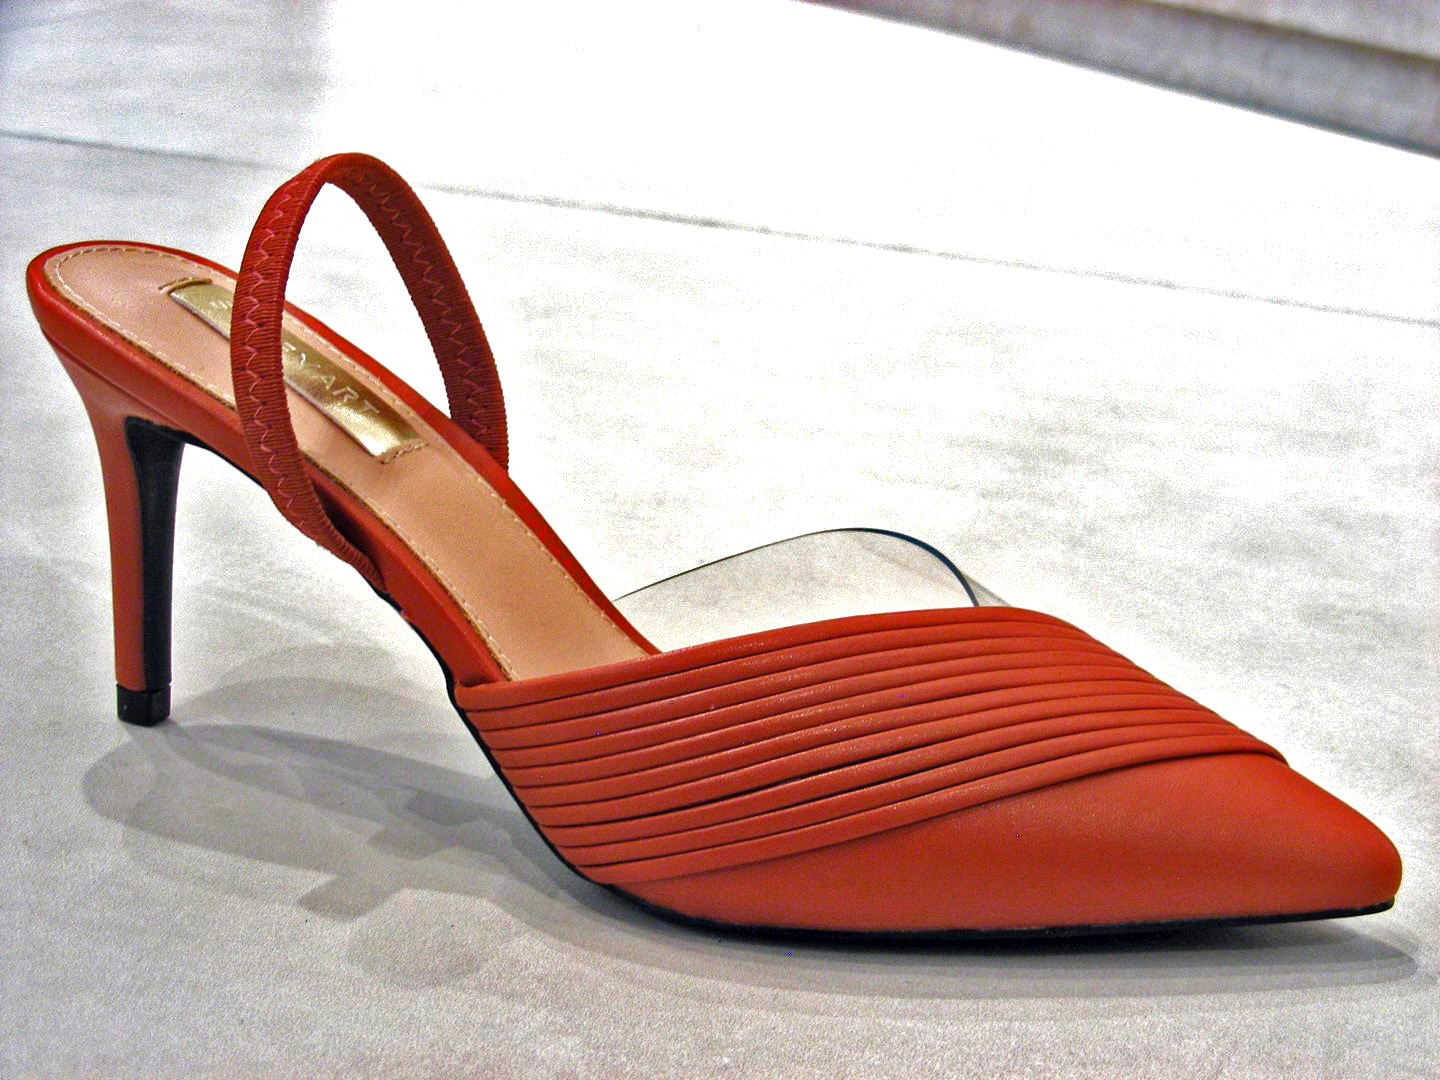 DESIGN PRESS WOMEN CLASSIC shoes